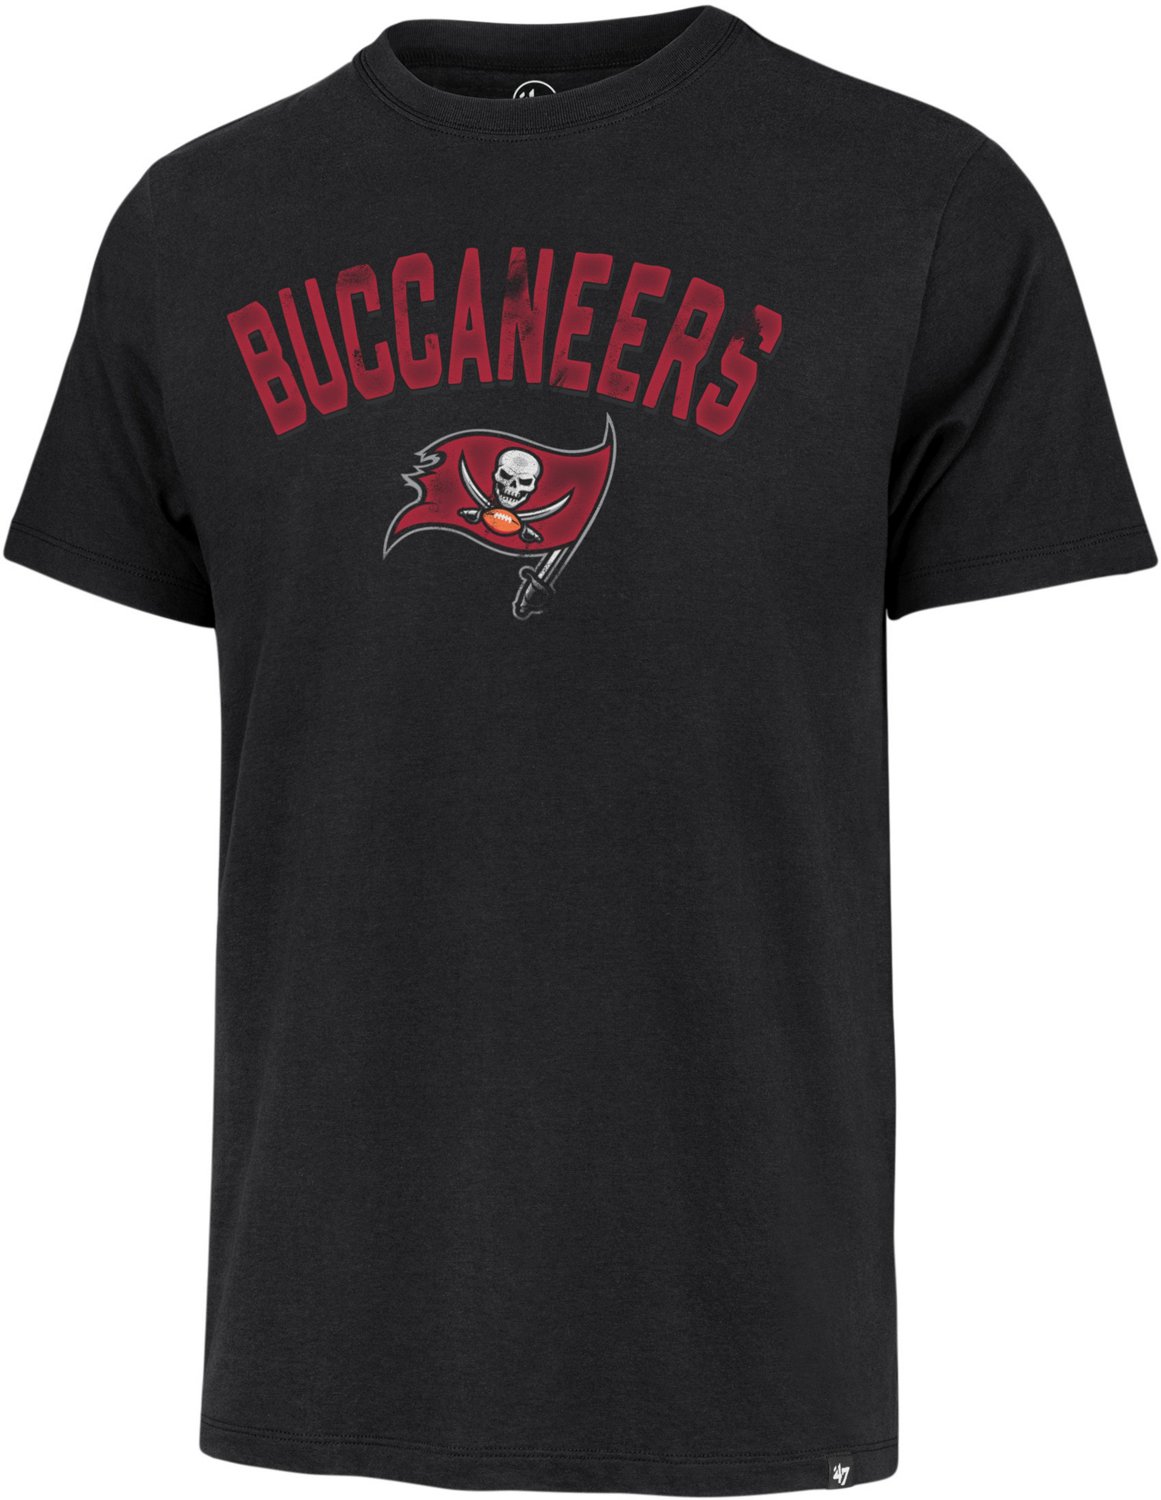 FreshlyMadeFL Let's Go Bucs Tshirt - Tampa Bay - Buccaneers - Tampa Bay Bucs Football Team Tshirt Game Day